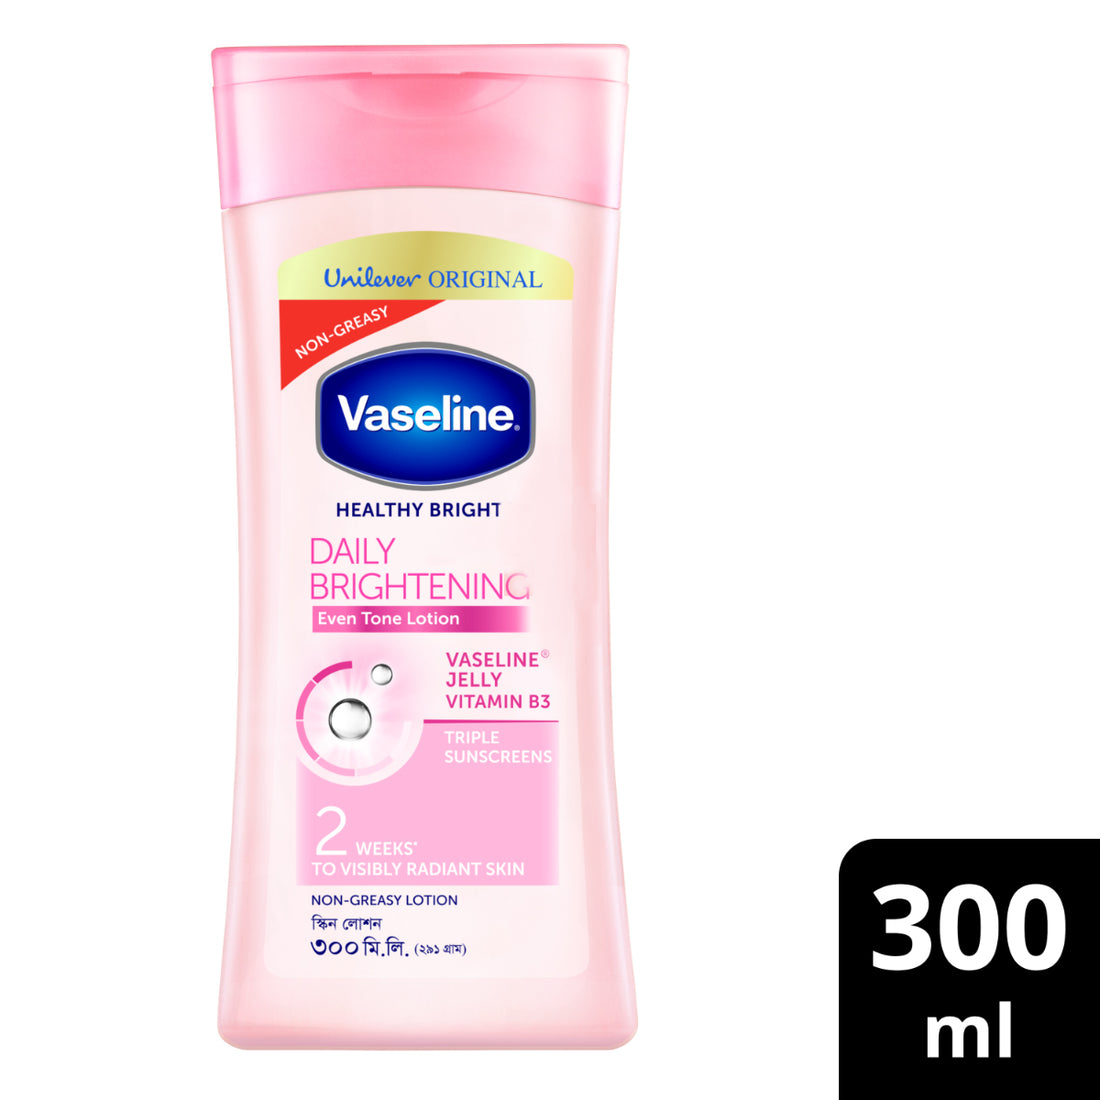 Vaseline Healthy Bright Lotion (300ml)